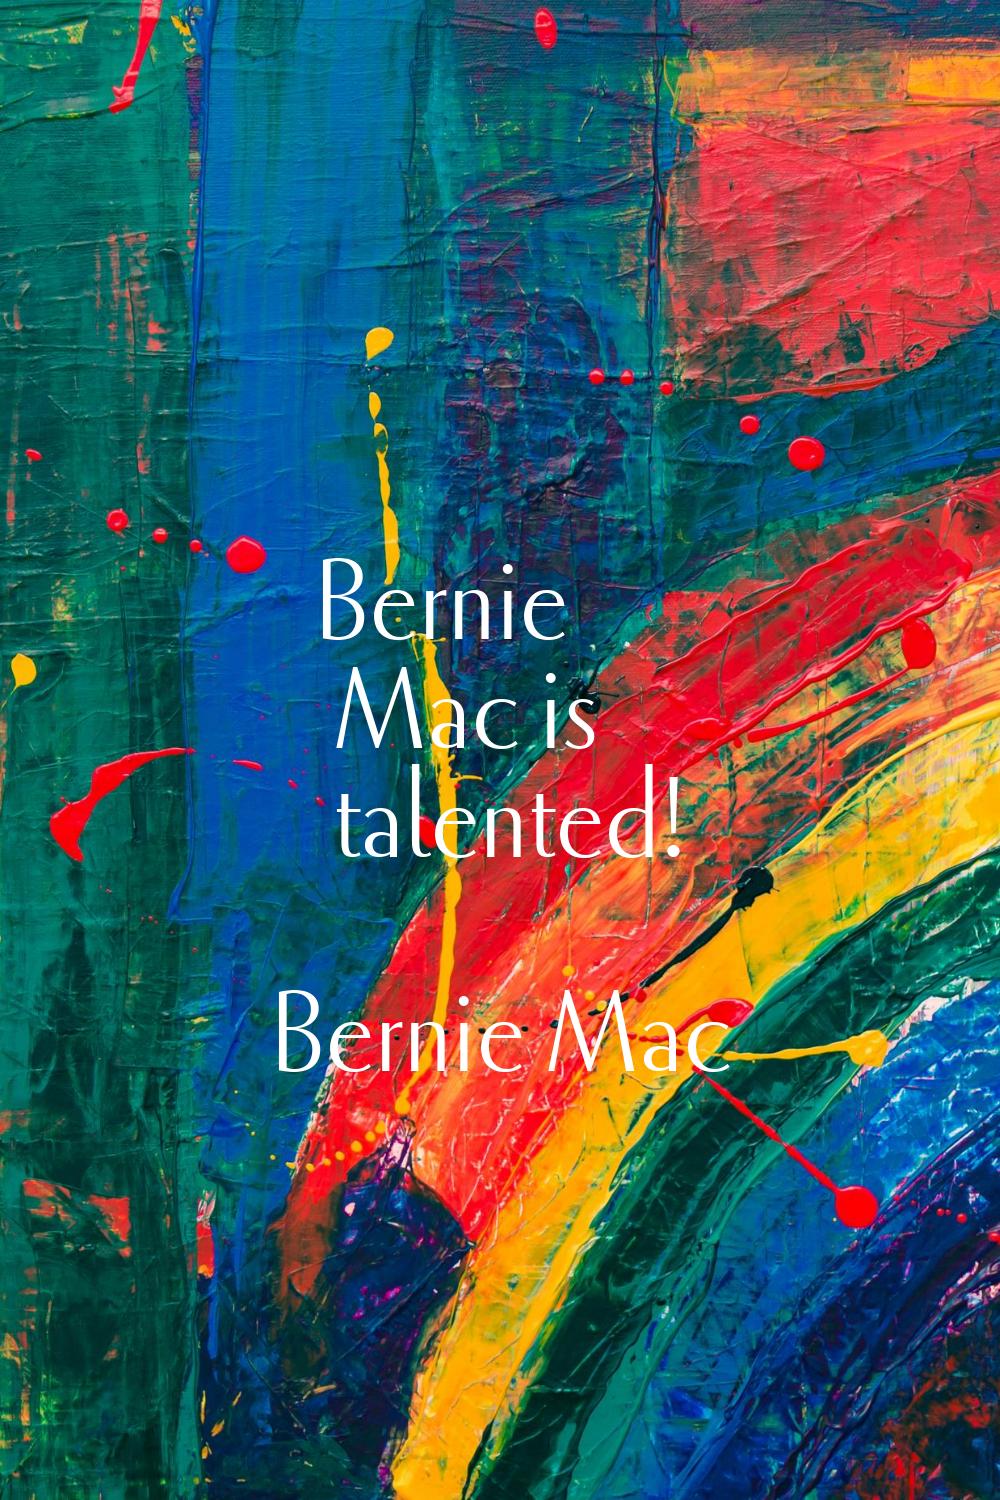 Bernie Mac is talented!